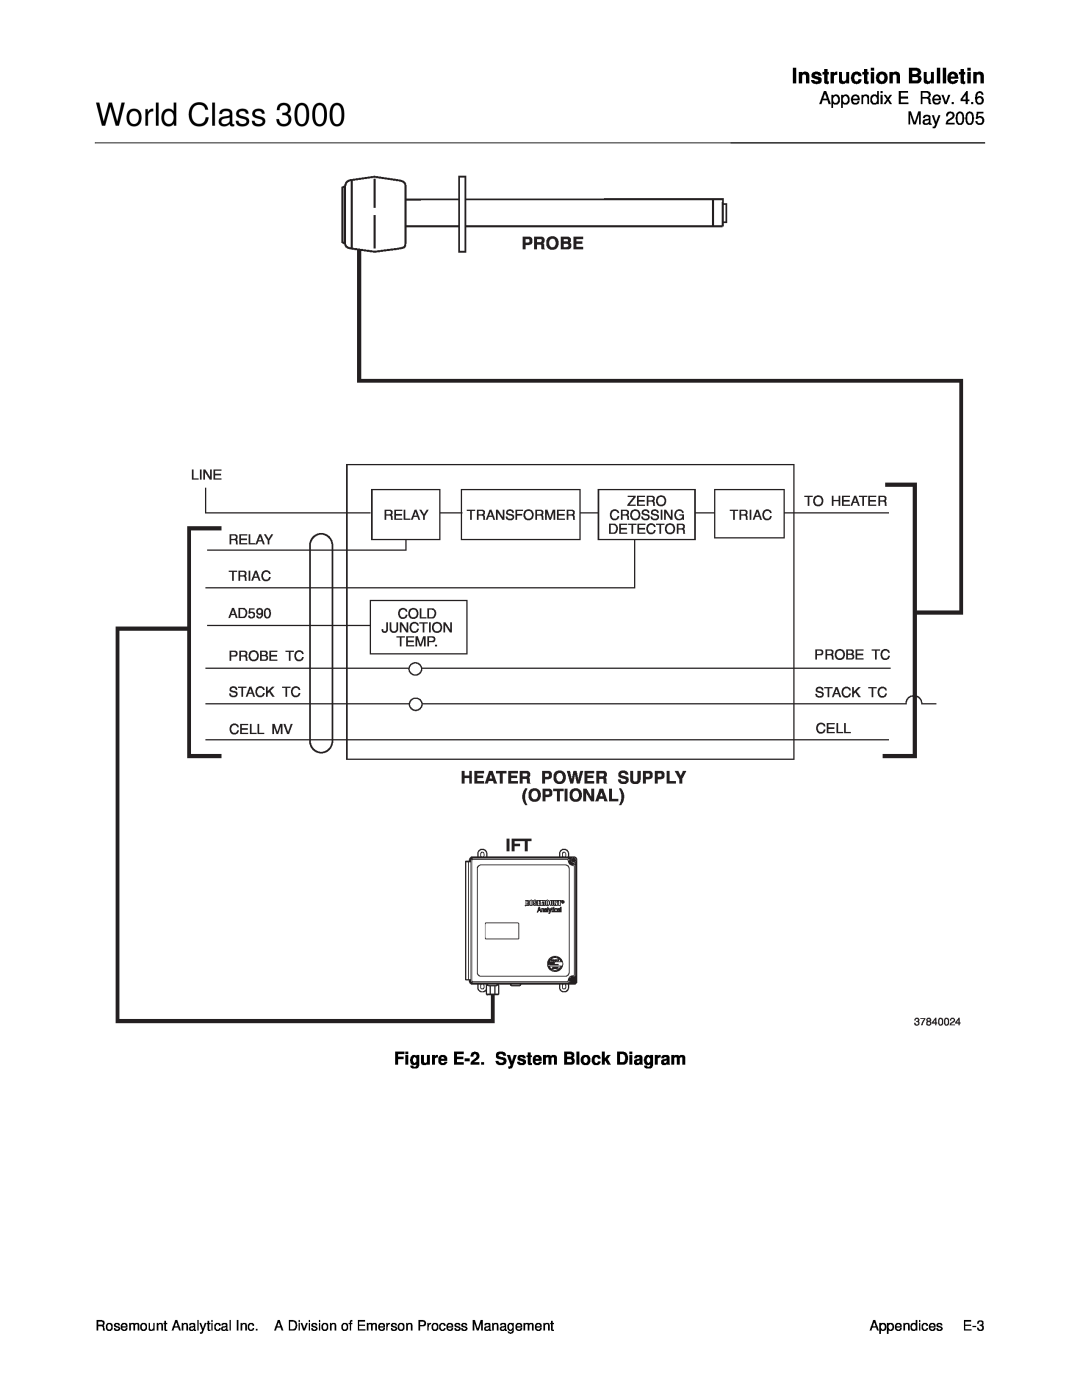 Emerson 3000 World Class, Instruction Bulletin, Probe, Heater Power Supply Optional Ift, Figure E-2.System Block Diagram 